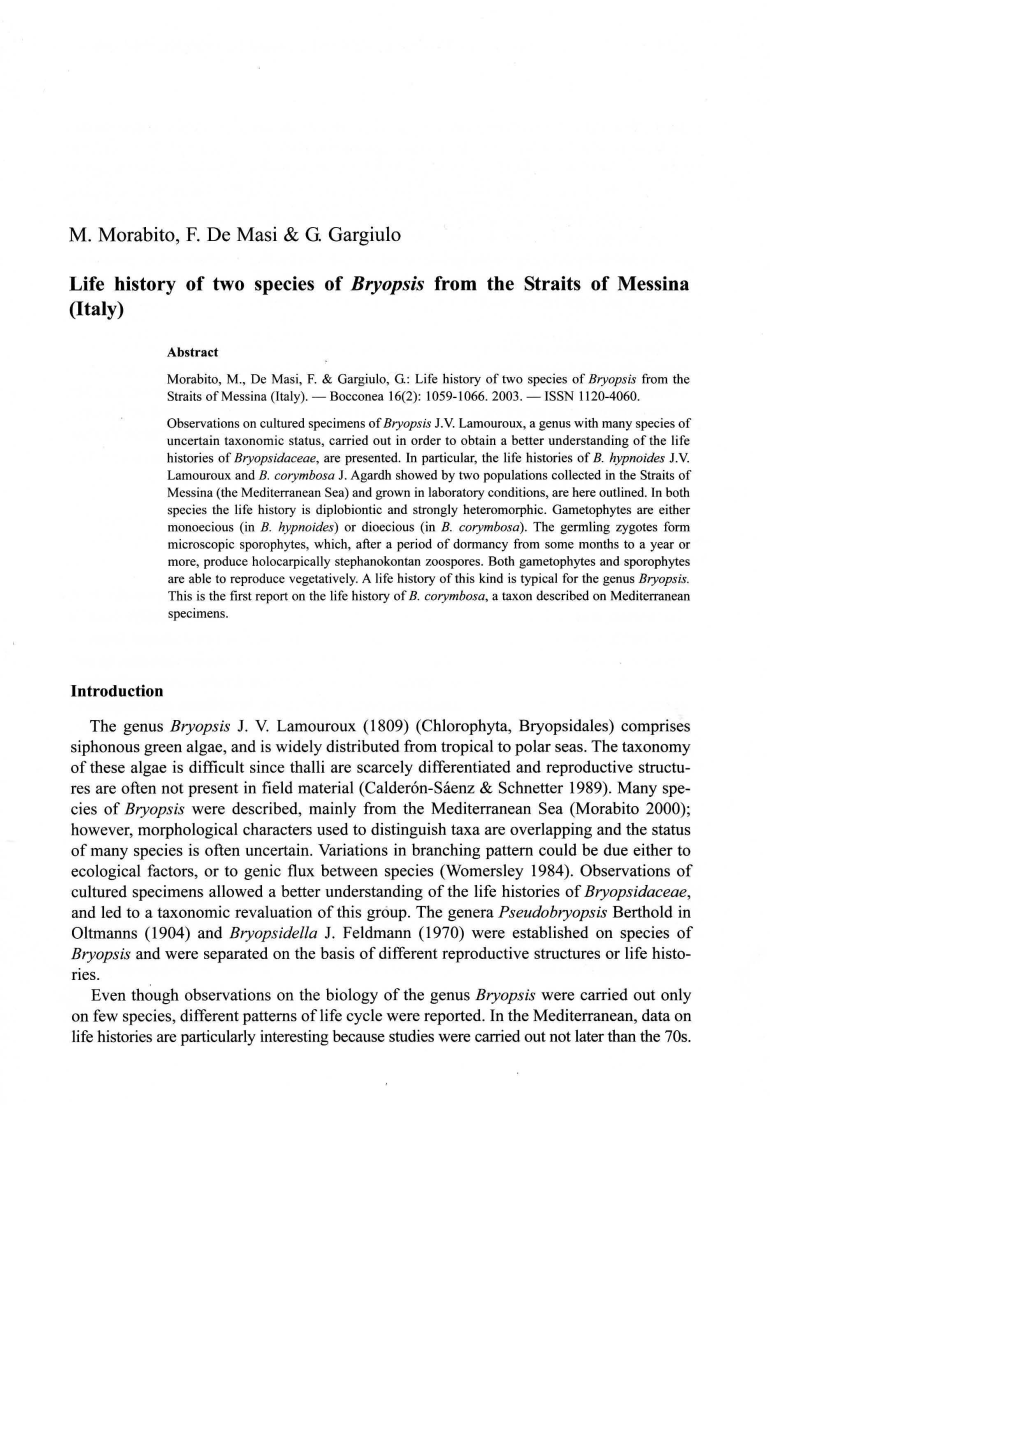 M. Morabito, F. De Masi & G. Gargiulo Life History of Two Species of Bryopsis from the Straits of Messina